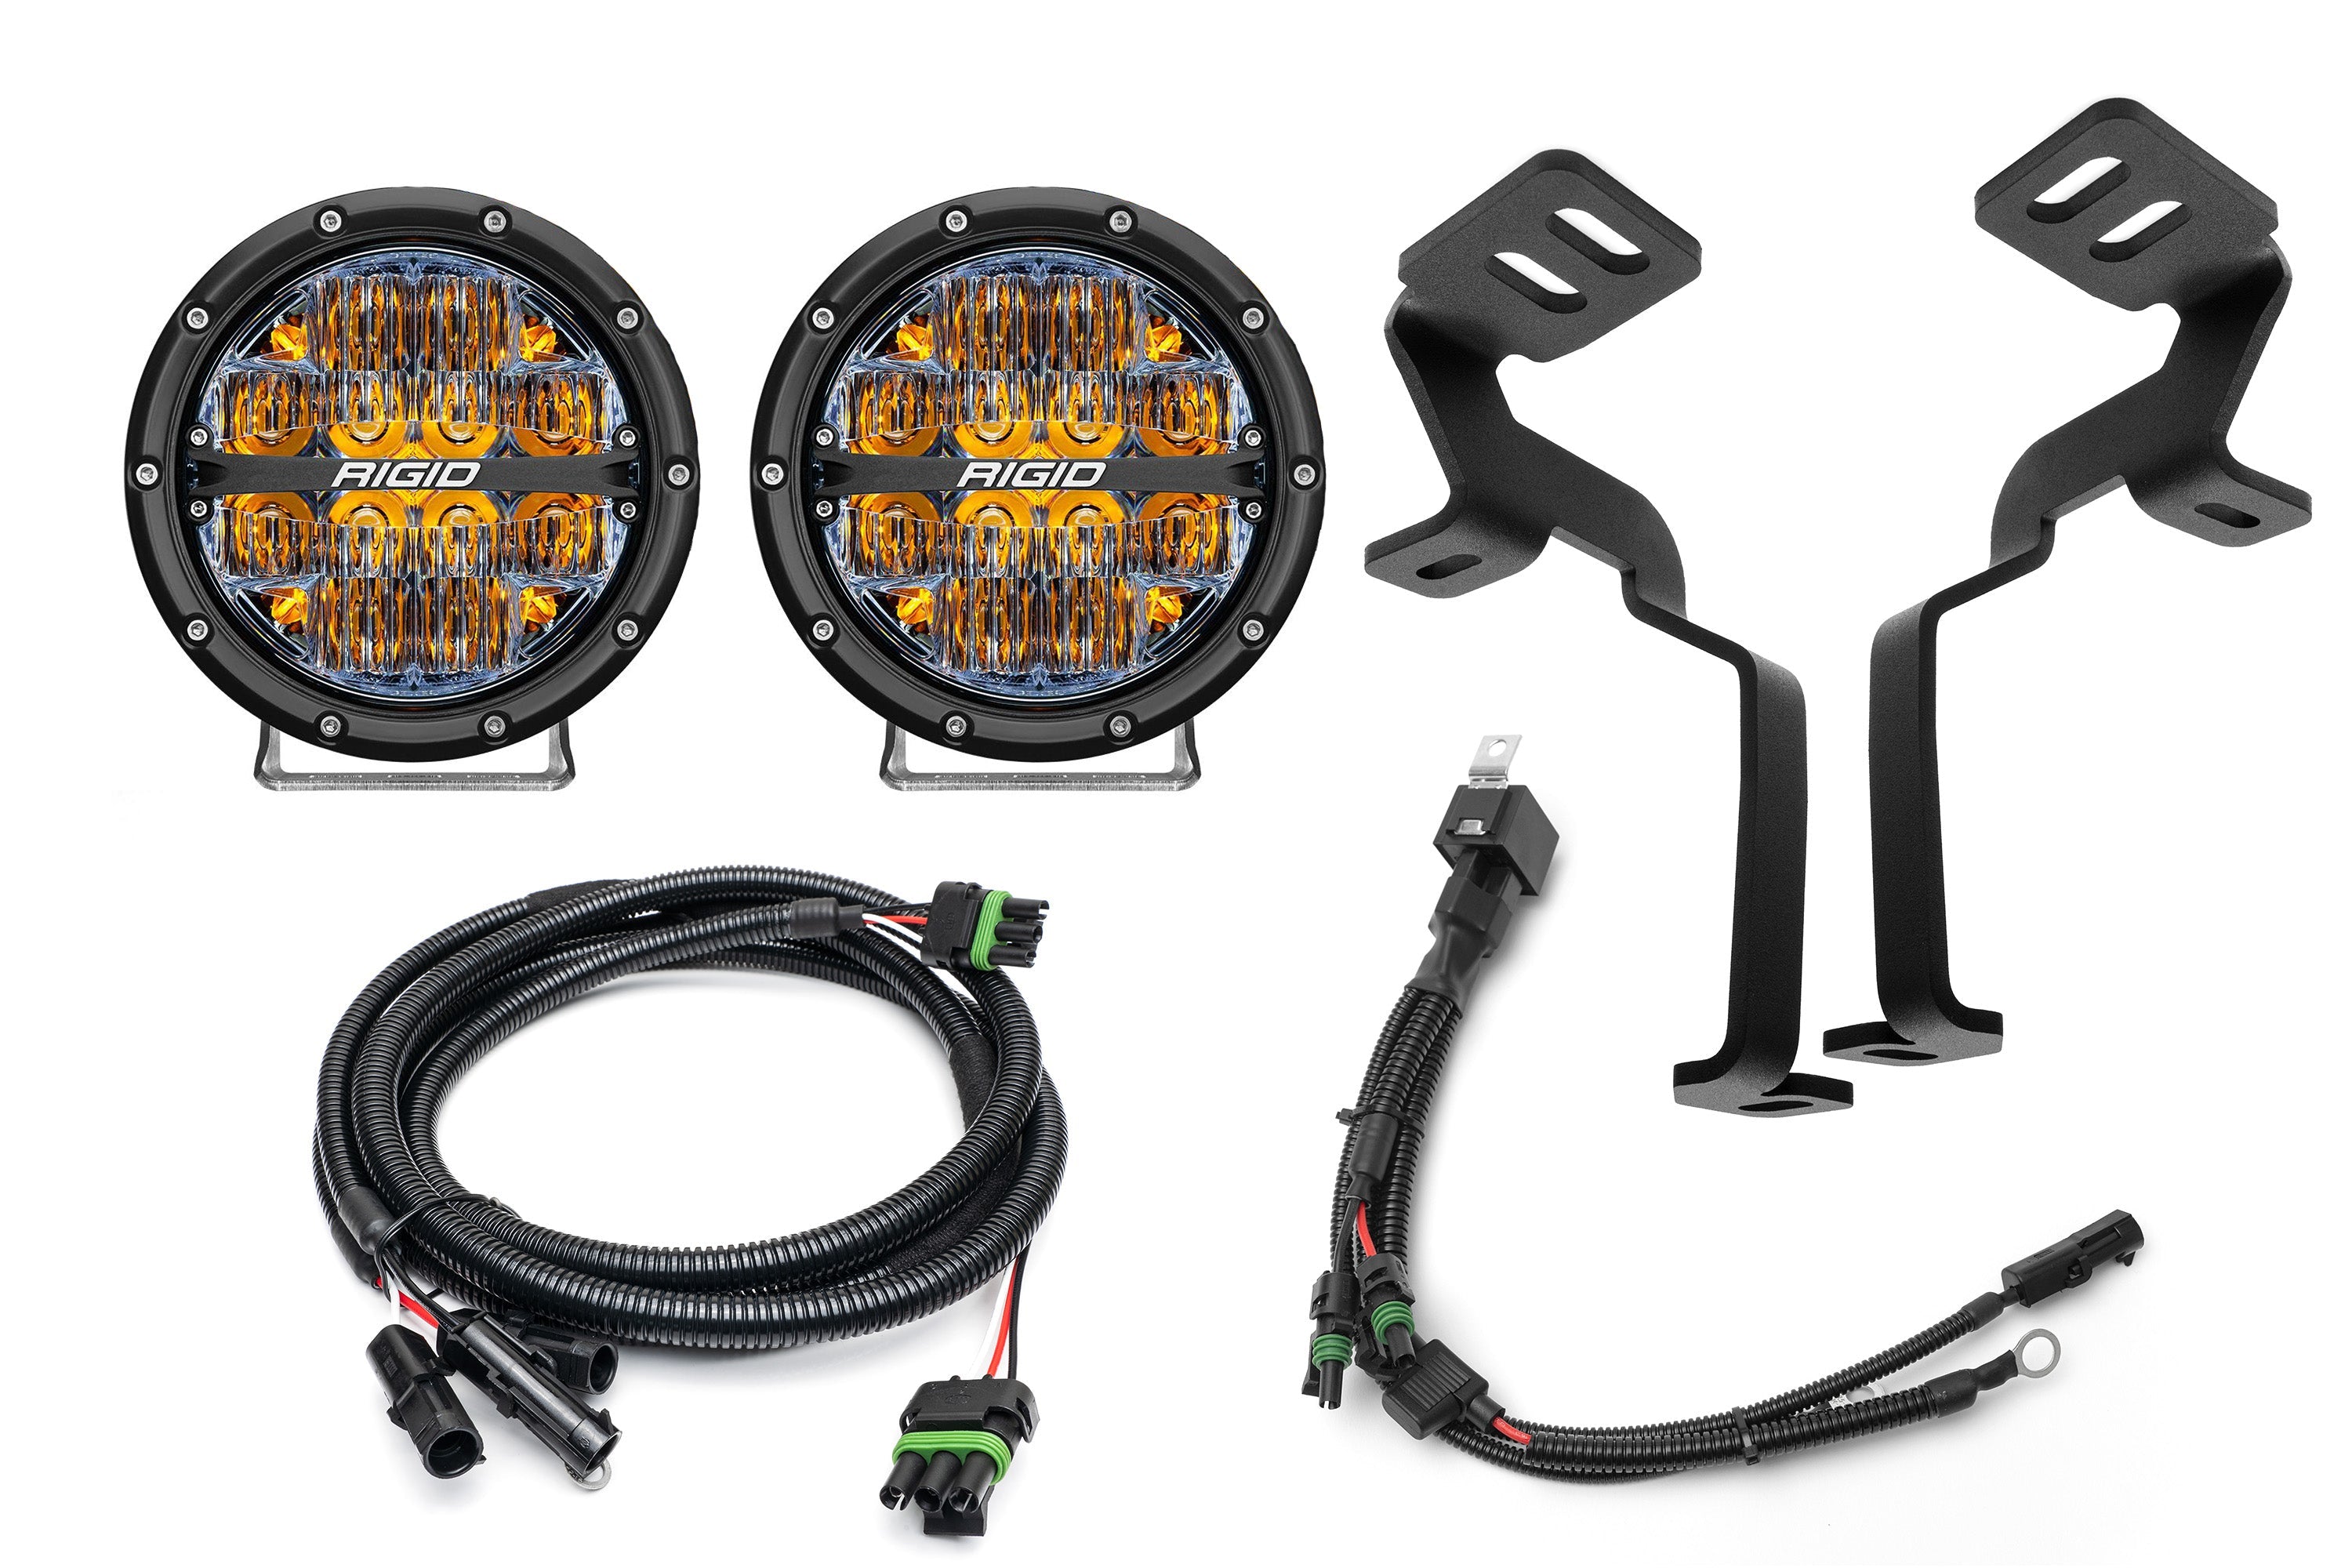 SPV Parts Rigid 360 Series 6 inch - A - Pillar (Ditch) Light Kit for Ford 2021+ Raptor/Tremor, F-150 ALL Models